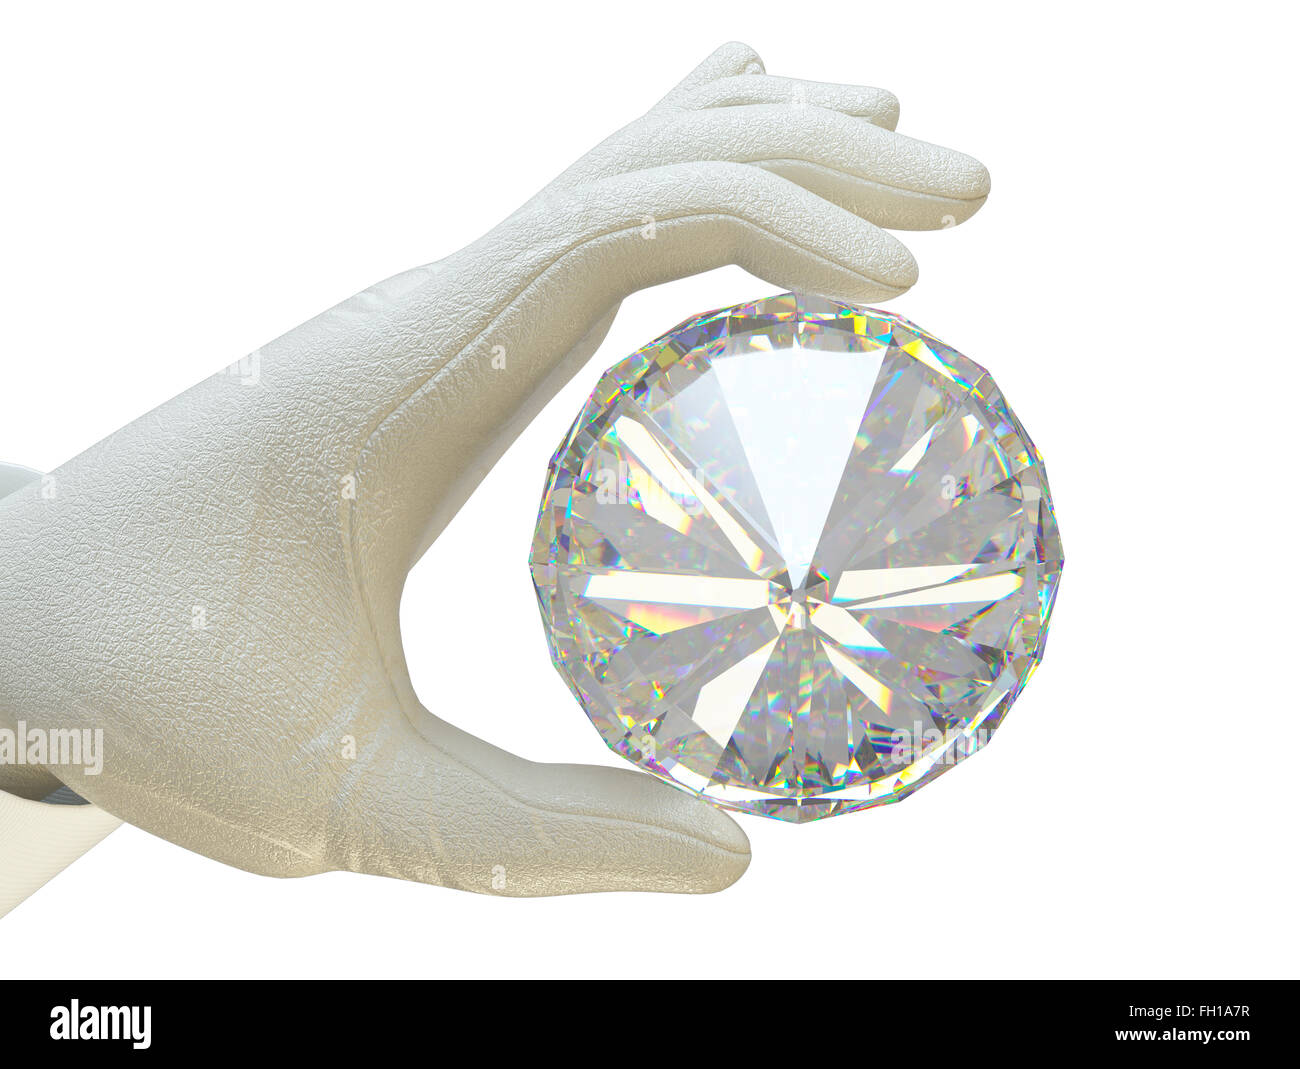 Hand in white glove holding huge gemstone or diamond Stock Photo